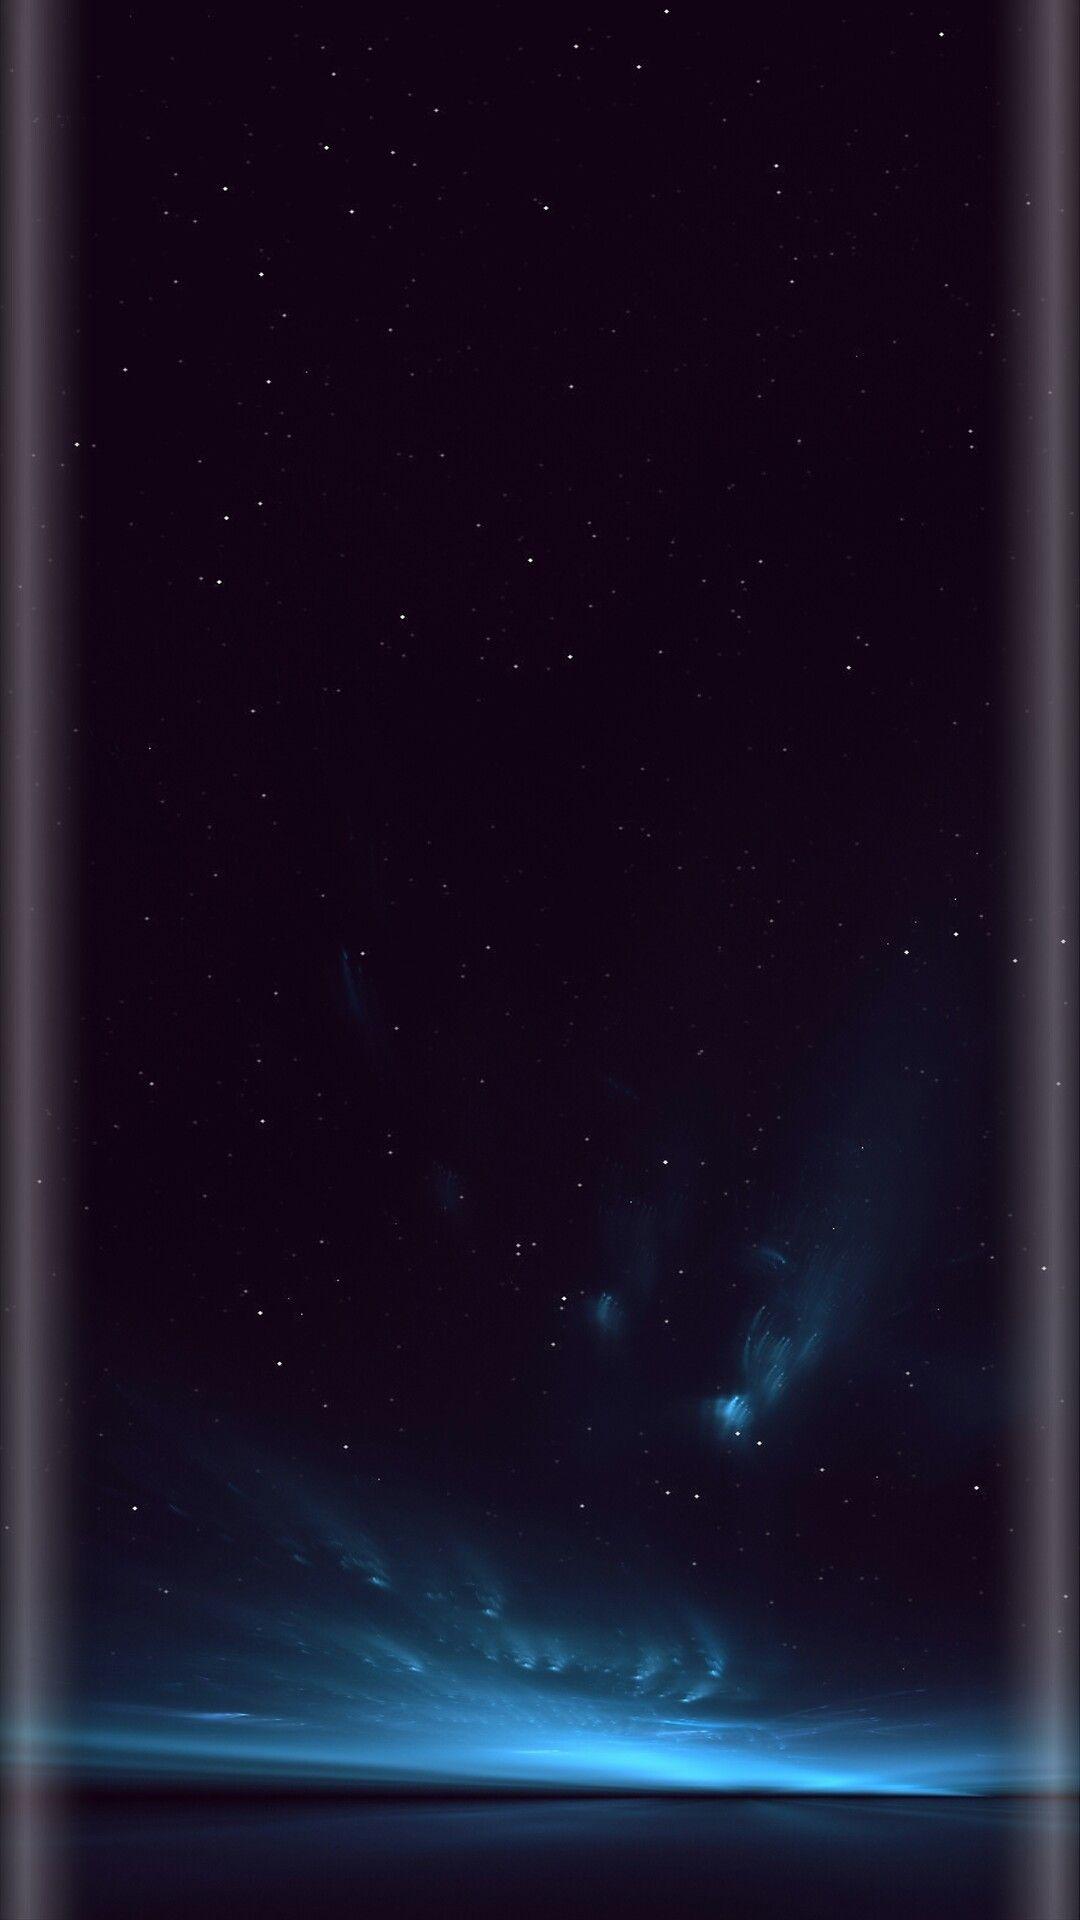 wallpaper for mobile phone. Full HD em 2019. Galaxy s8